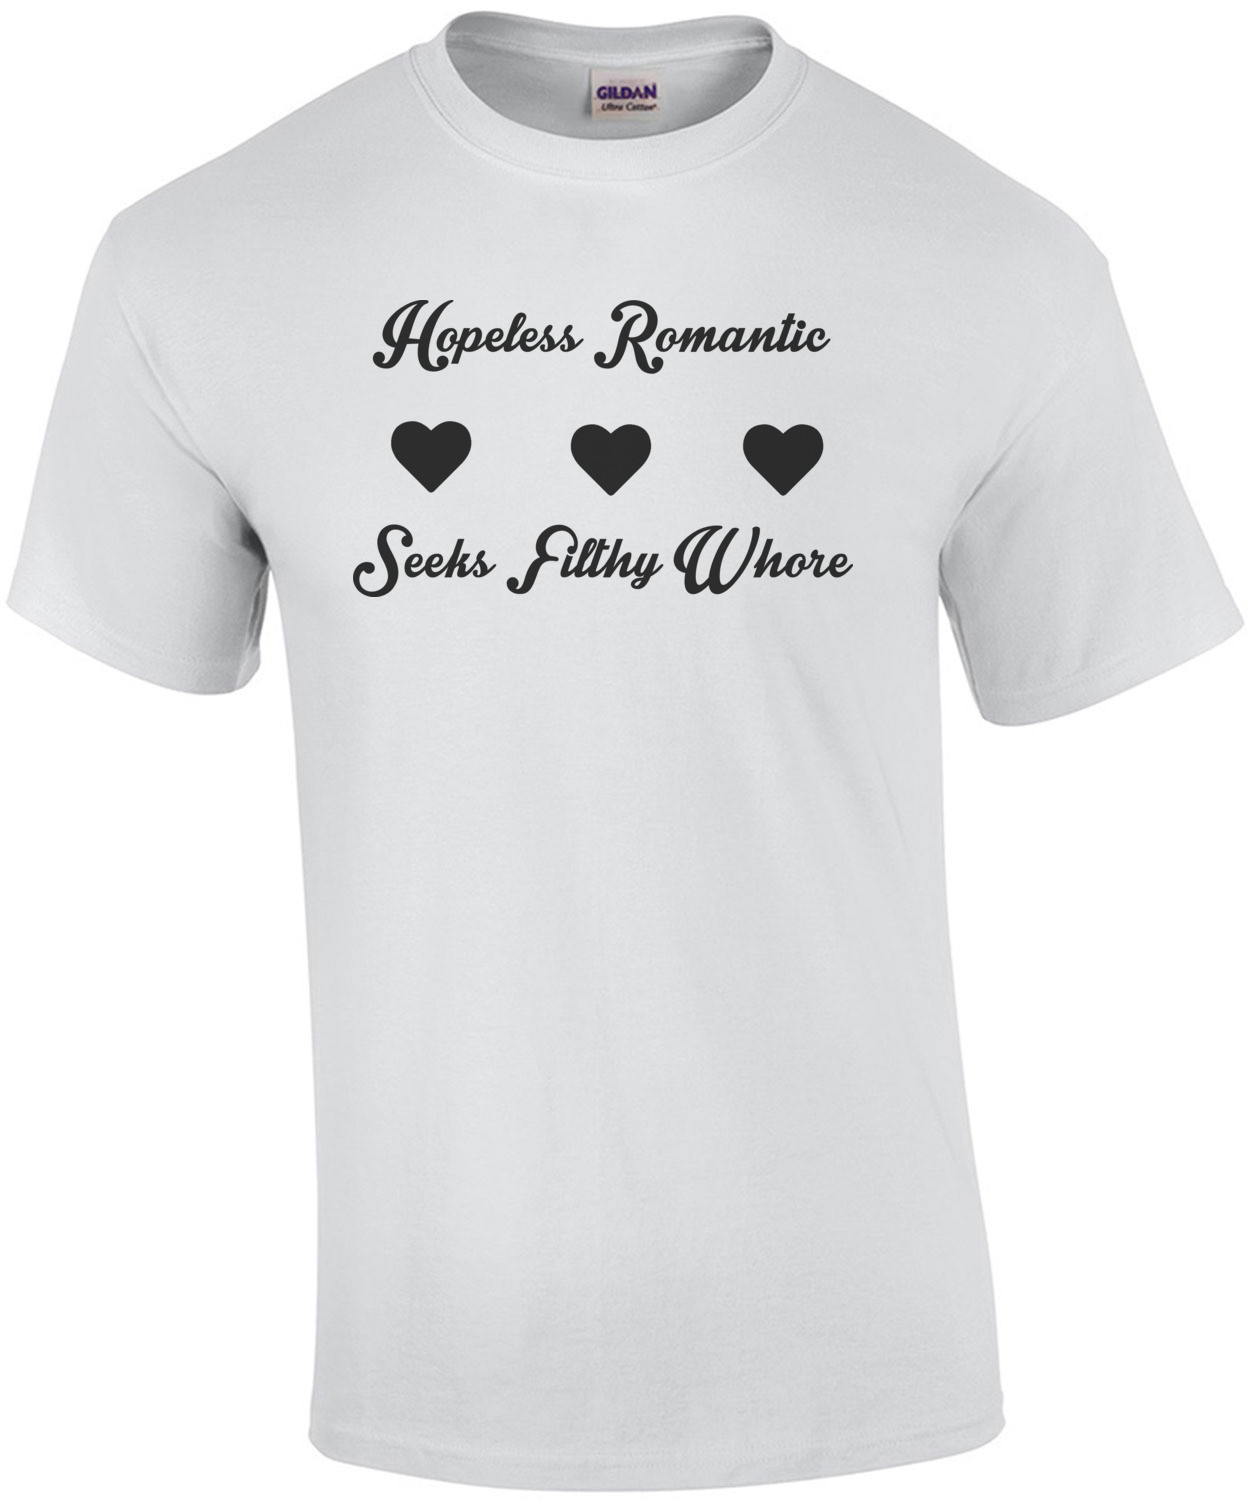 Hopeless Romantic Seeks Filthy Whore Funny Shirt